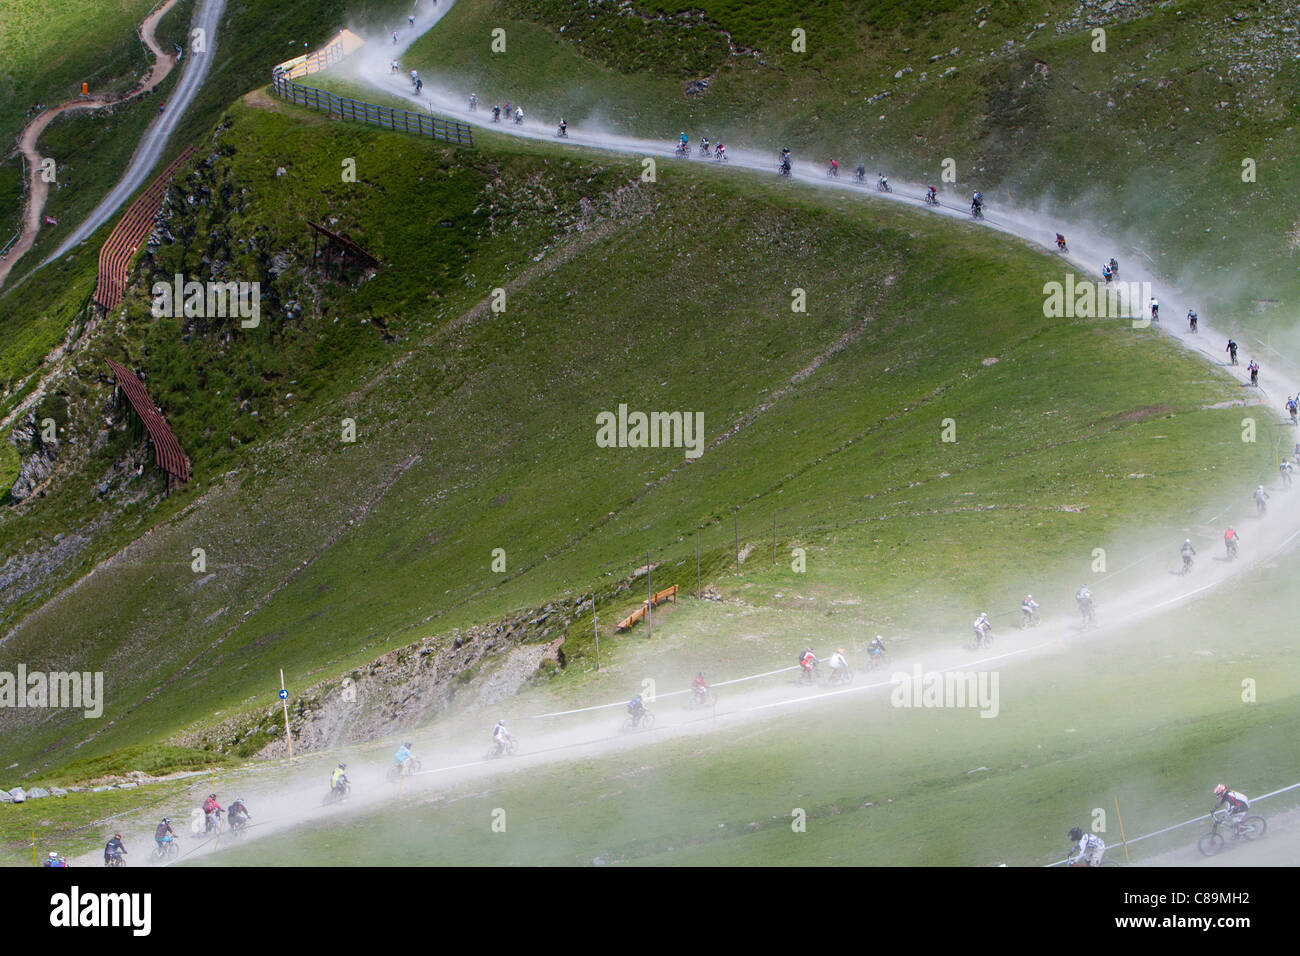 Austria, Salzburger Land, Hinterglemm, View of mountainbike downhill race on dusty gravel road Stock Photo